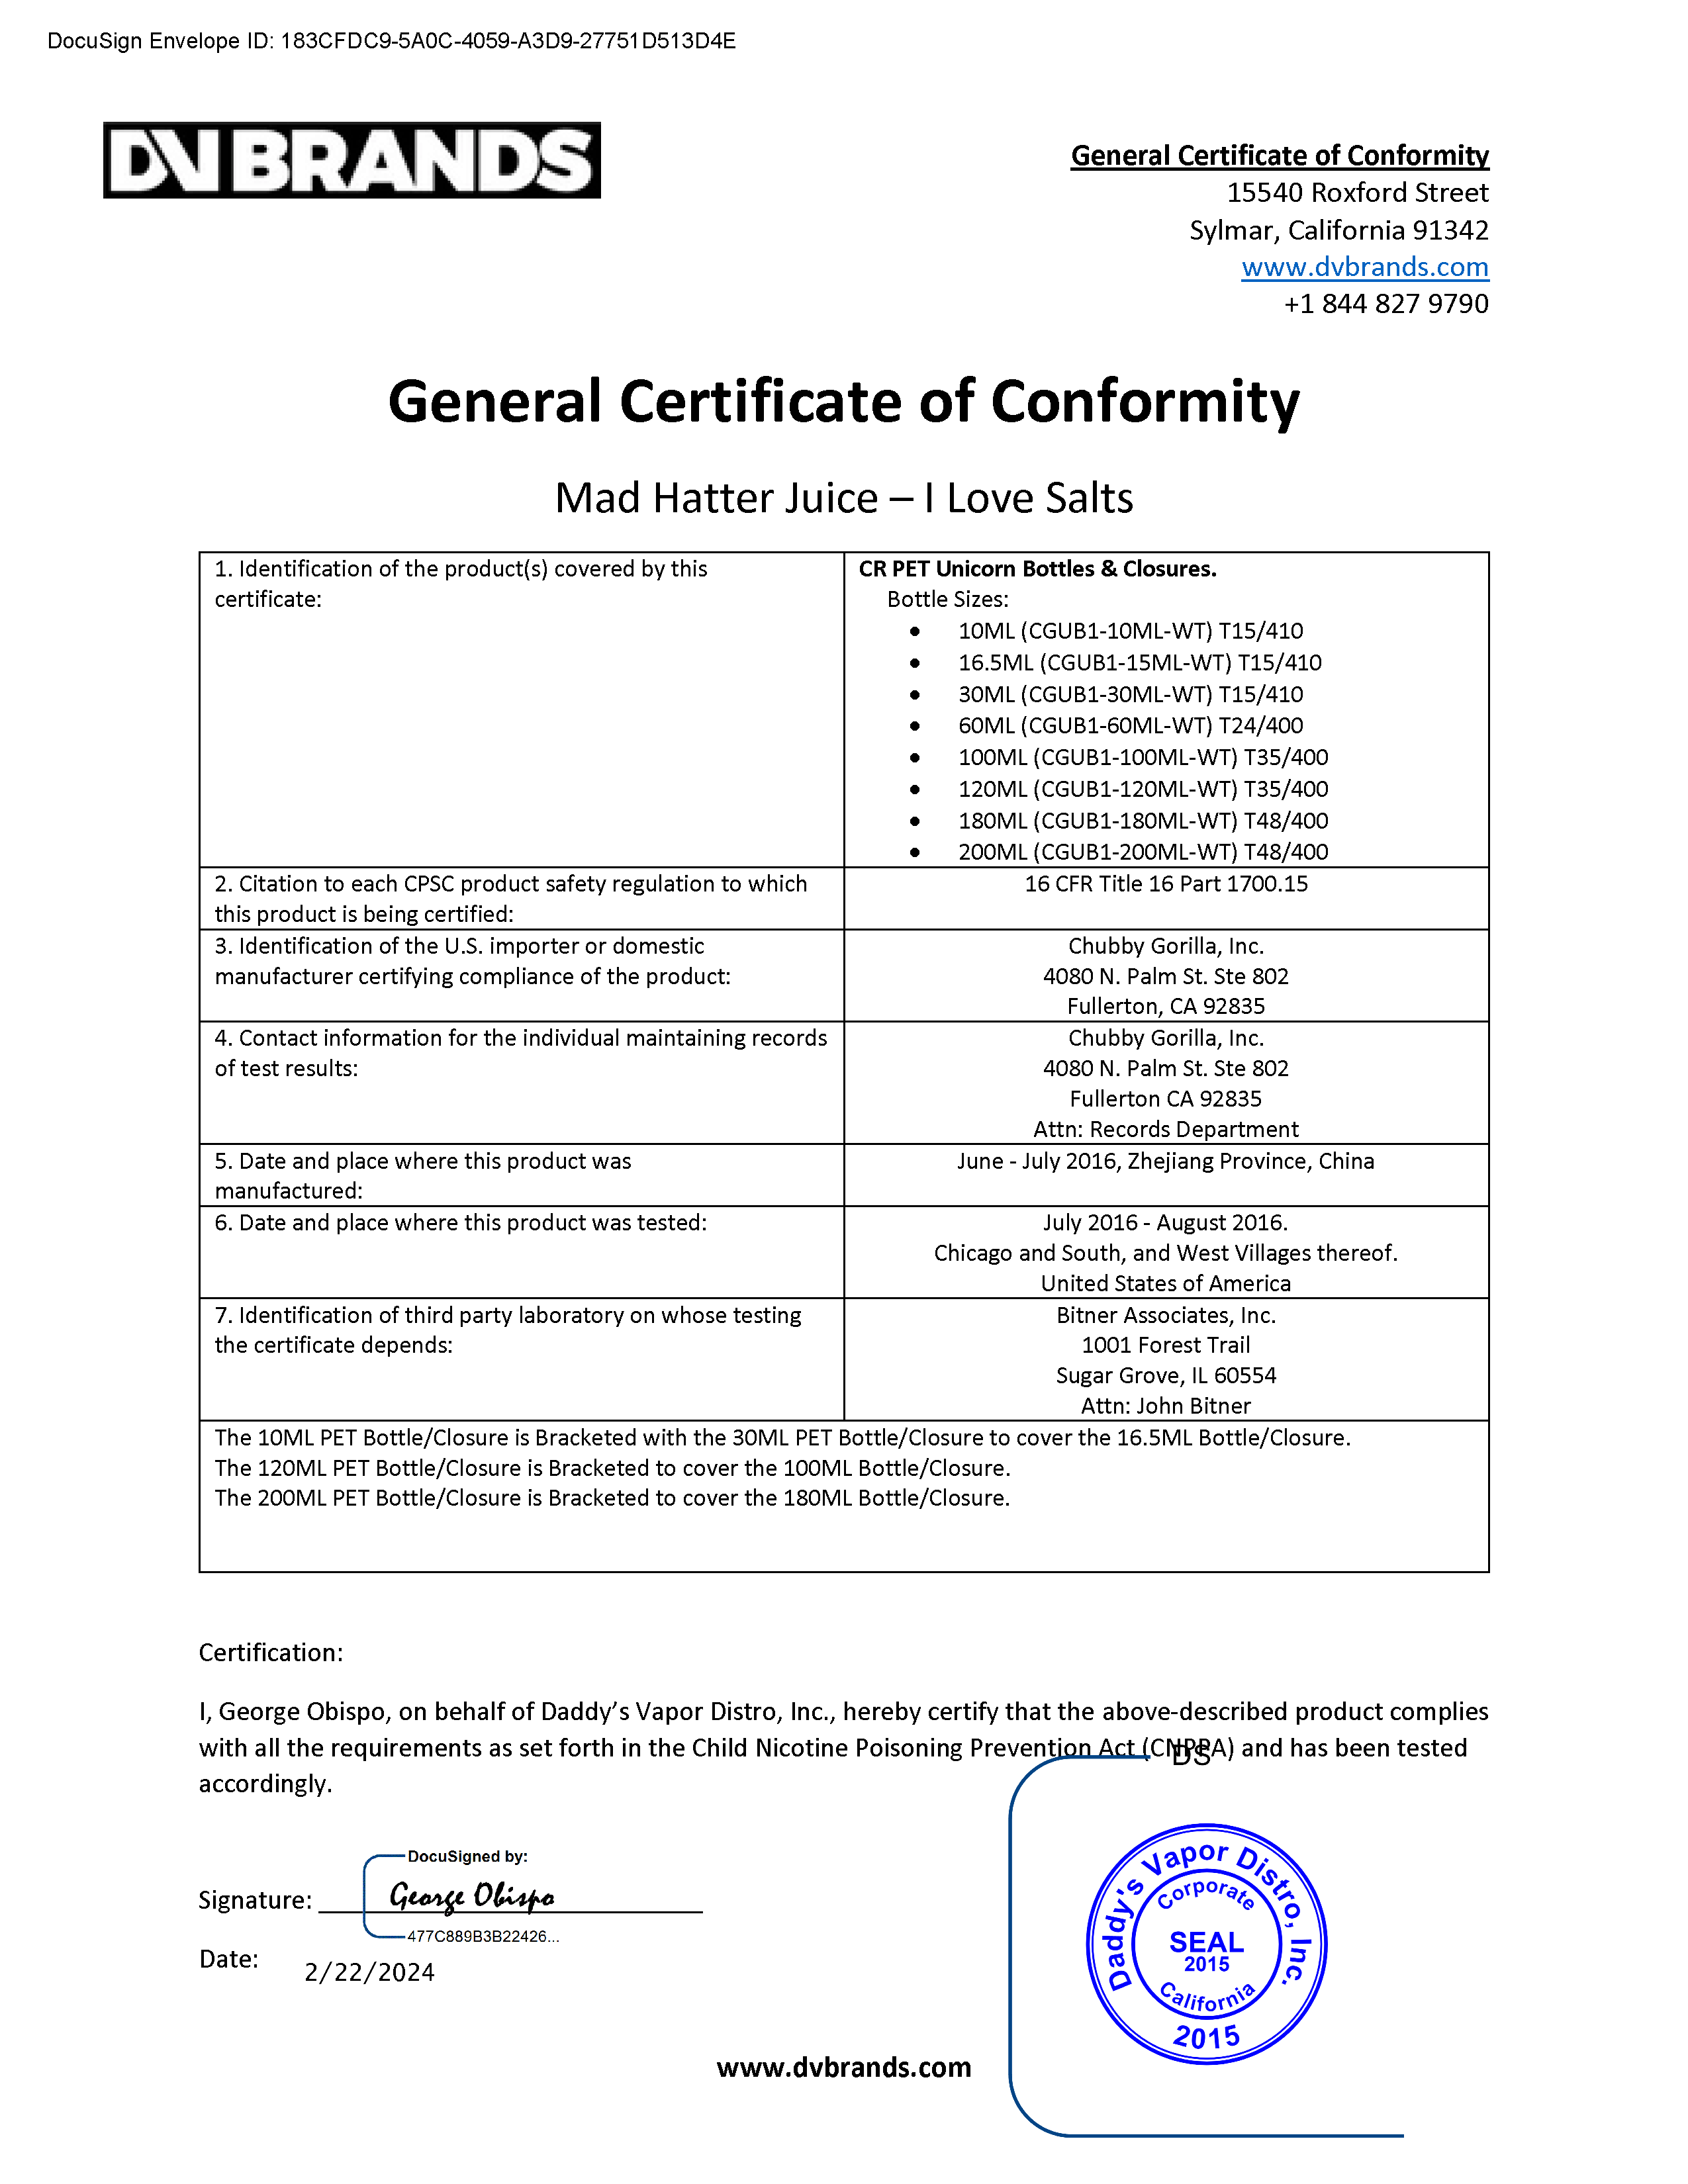 I love salts E-liquids General Certificate of Conformity